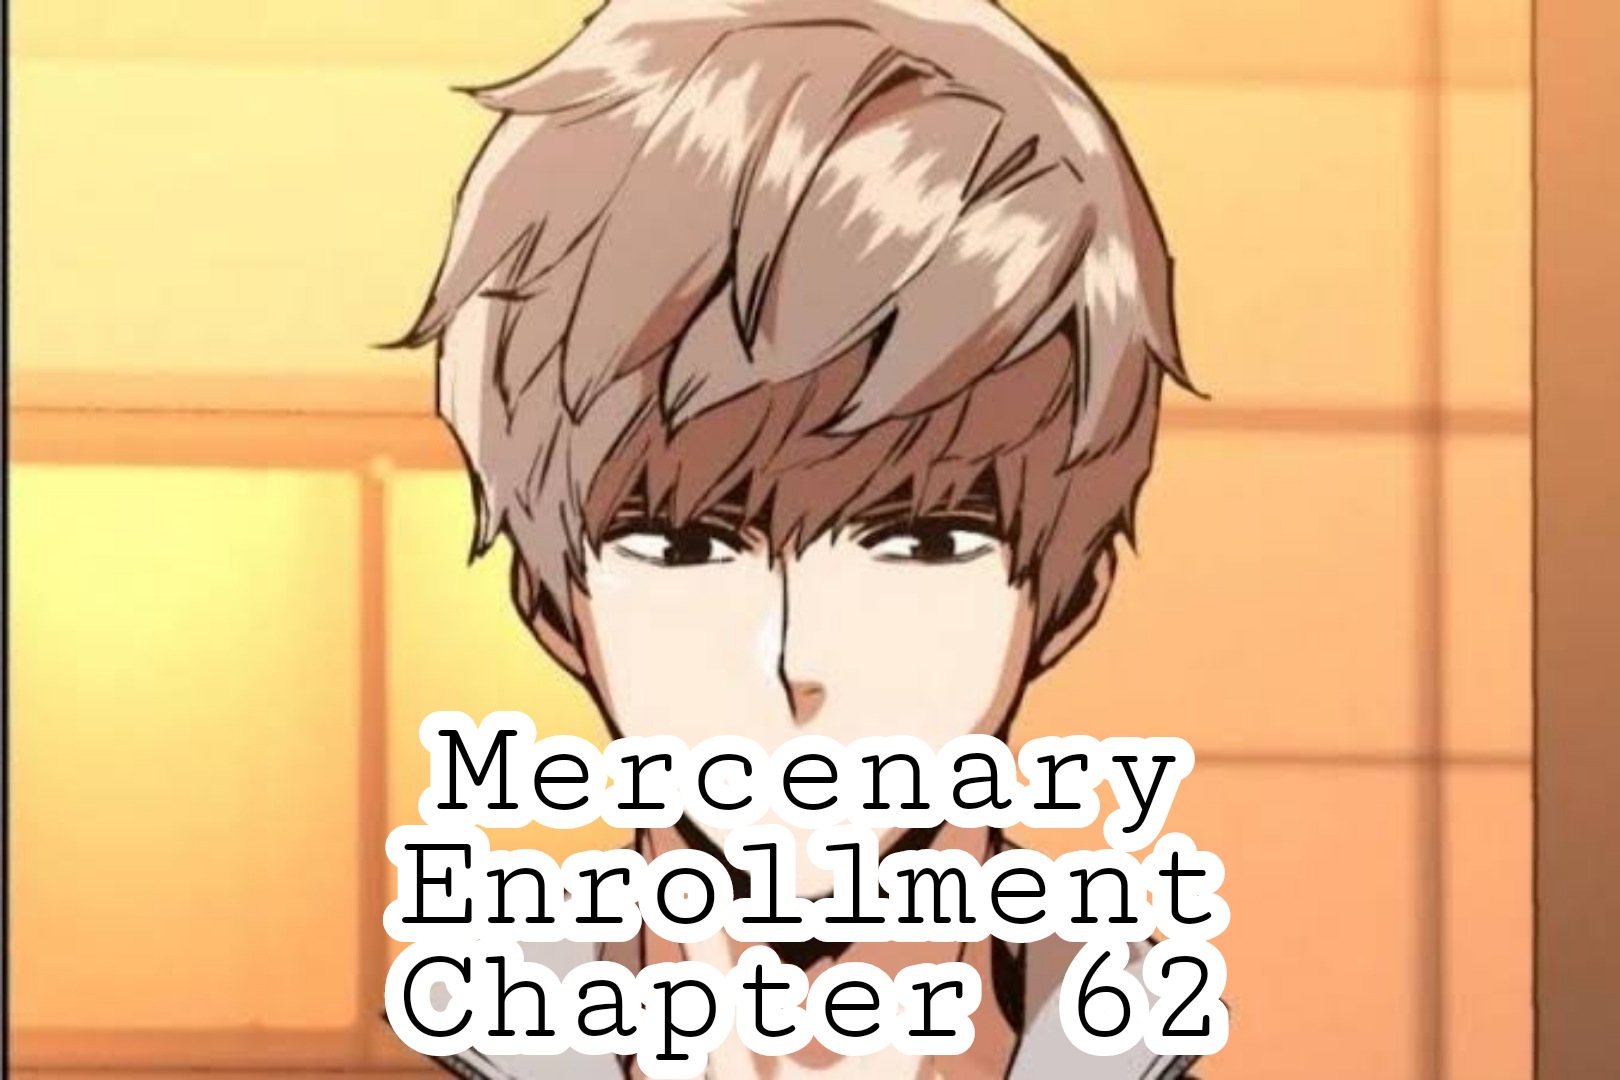 Манга прирожденный наемник 181. Mercenary Enrollment. Mercenary Enrollment Manga. Манхва Mercenary Enrollment. Mercenary Enrollment pls like and Subscribe.